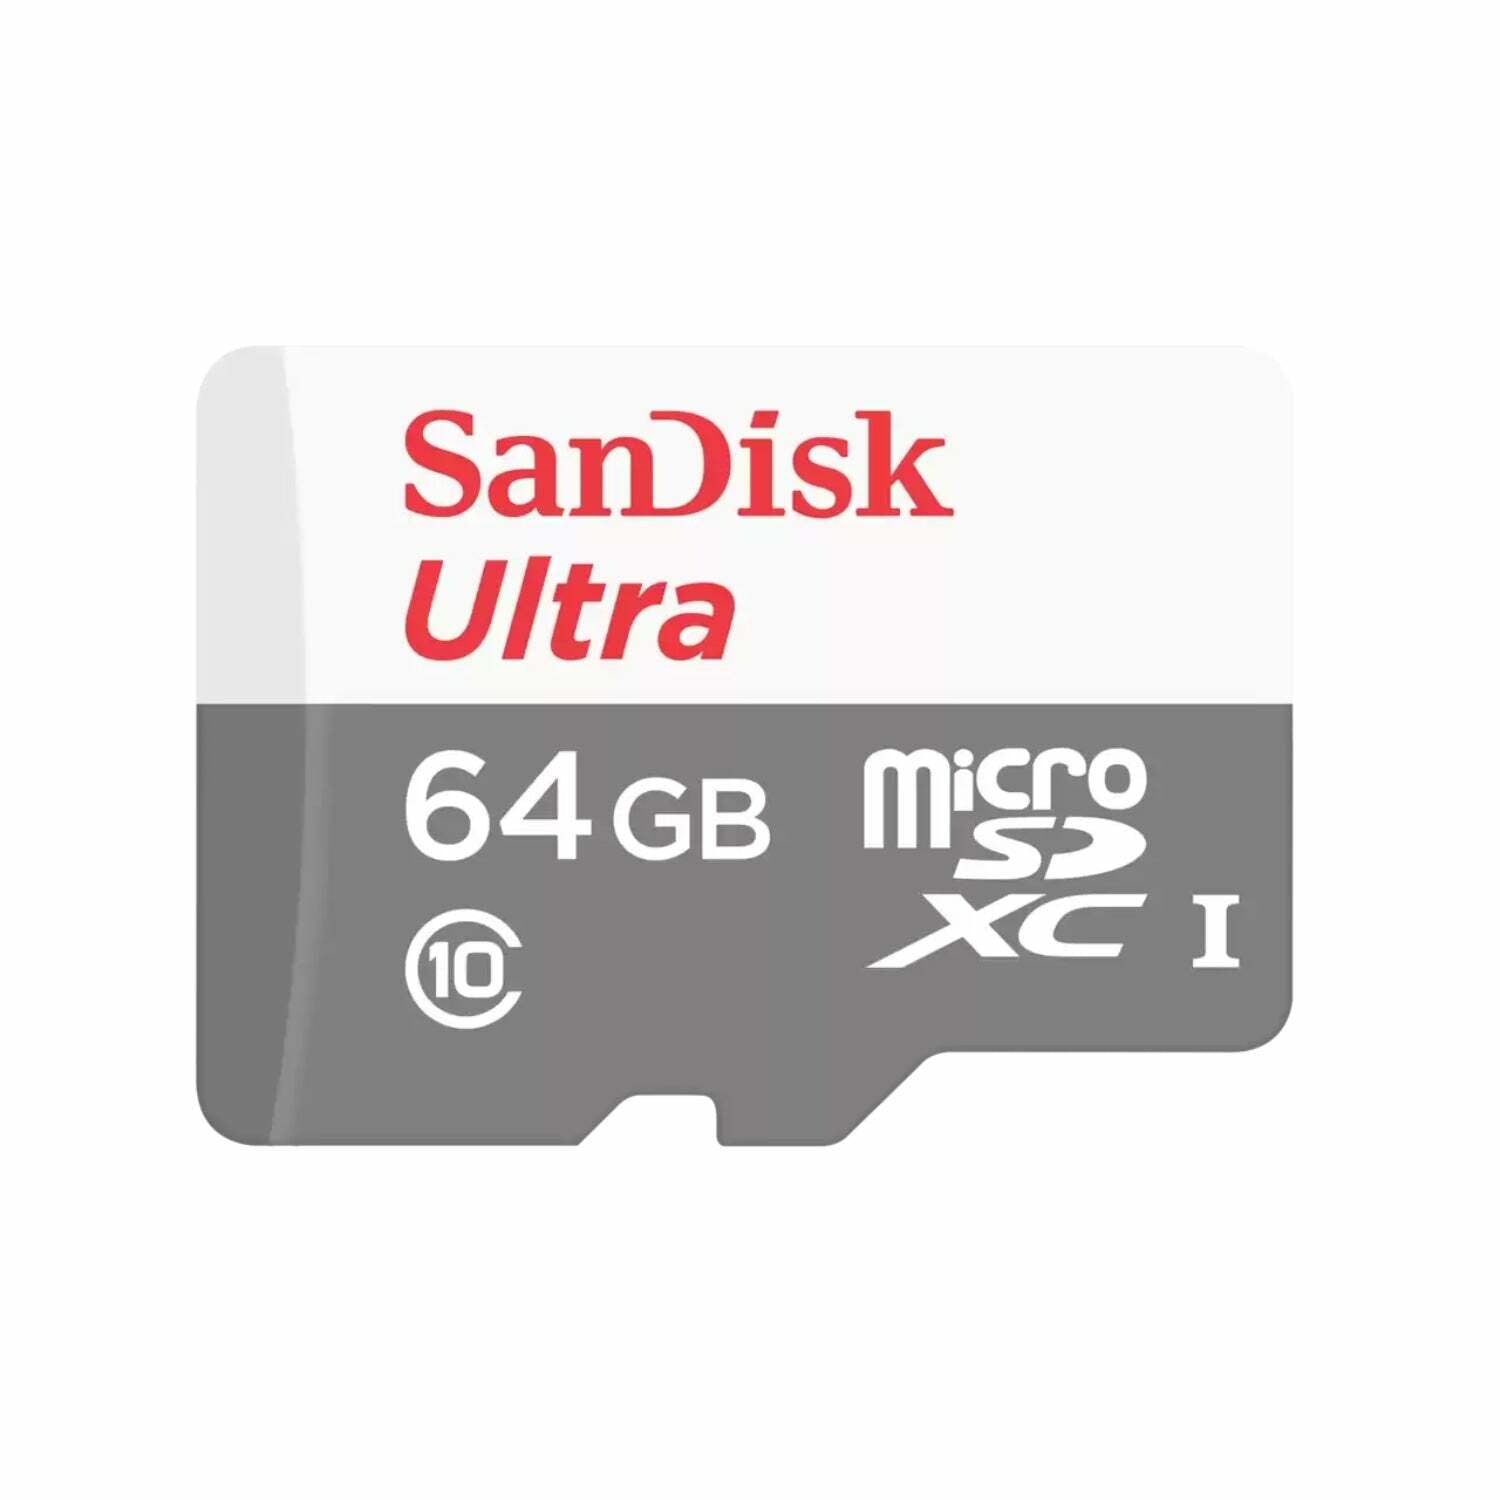 SanDisk Ultra 64GB 100MB/s Class 10 microSDXC Memory Card